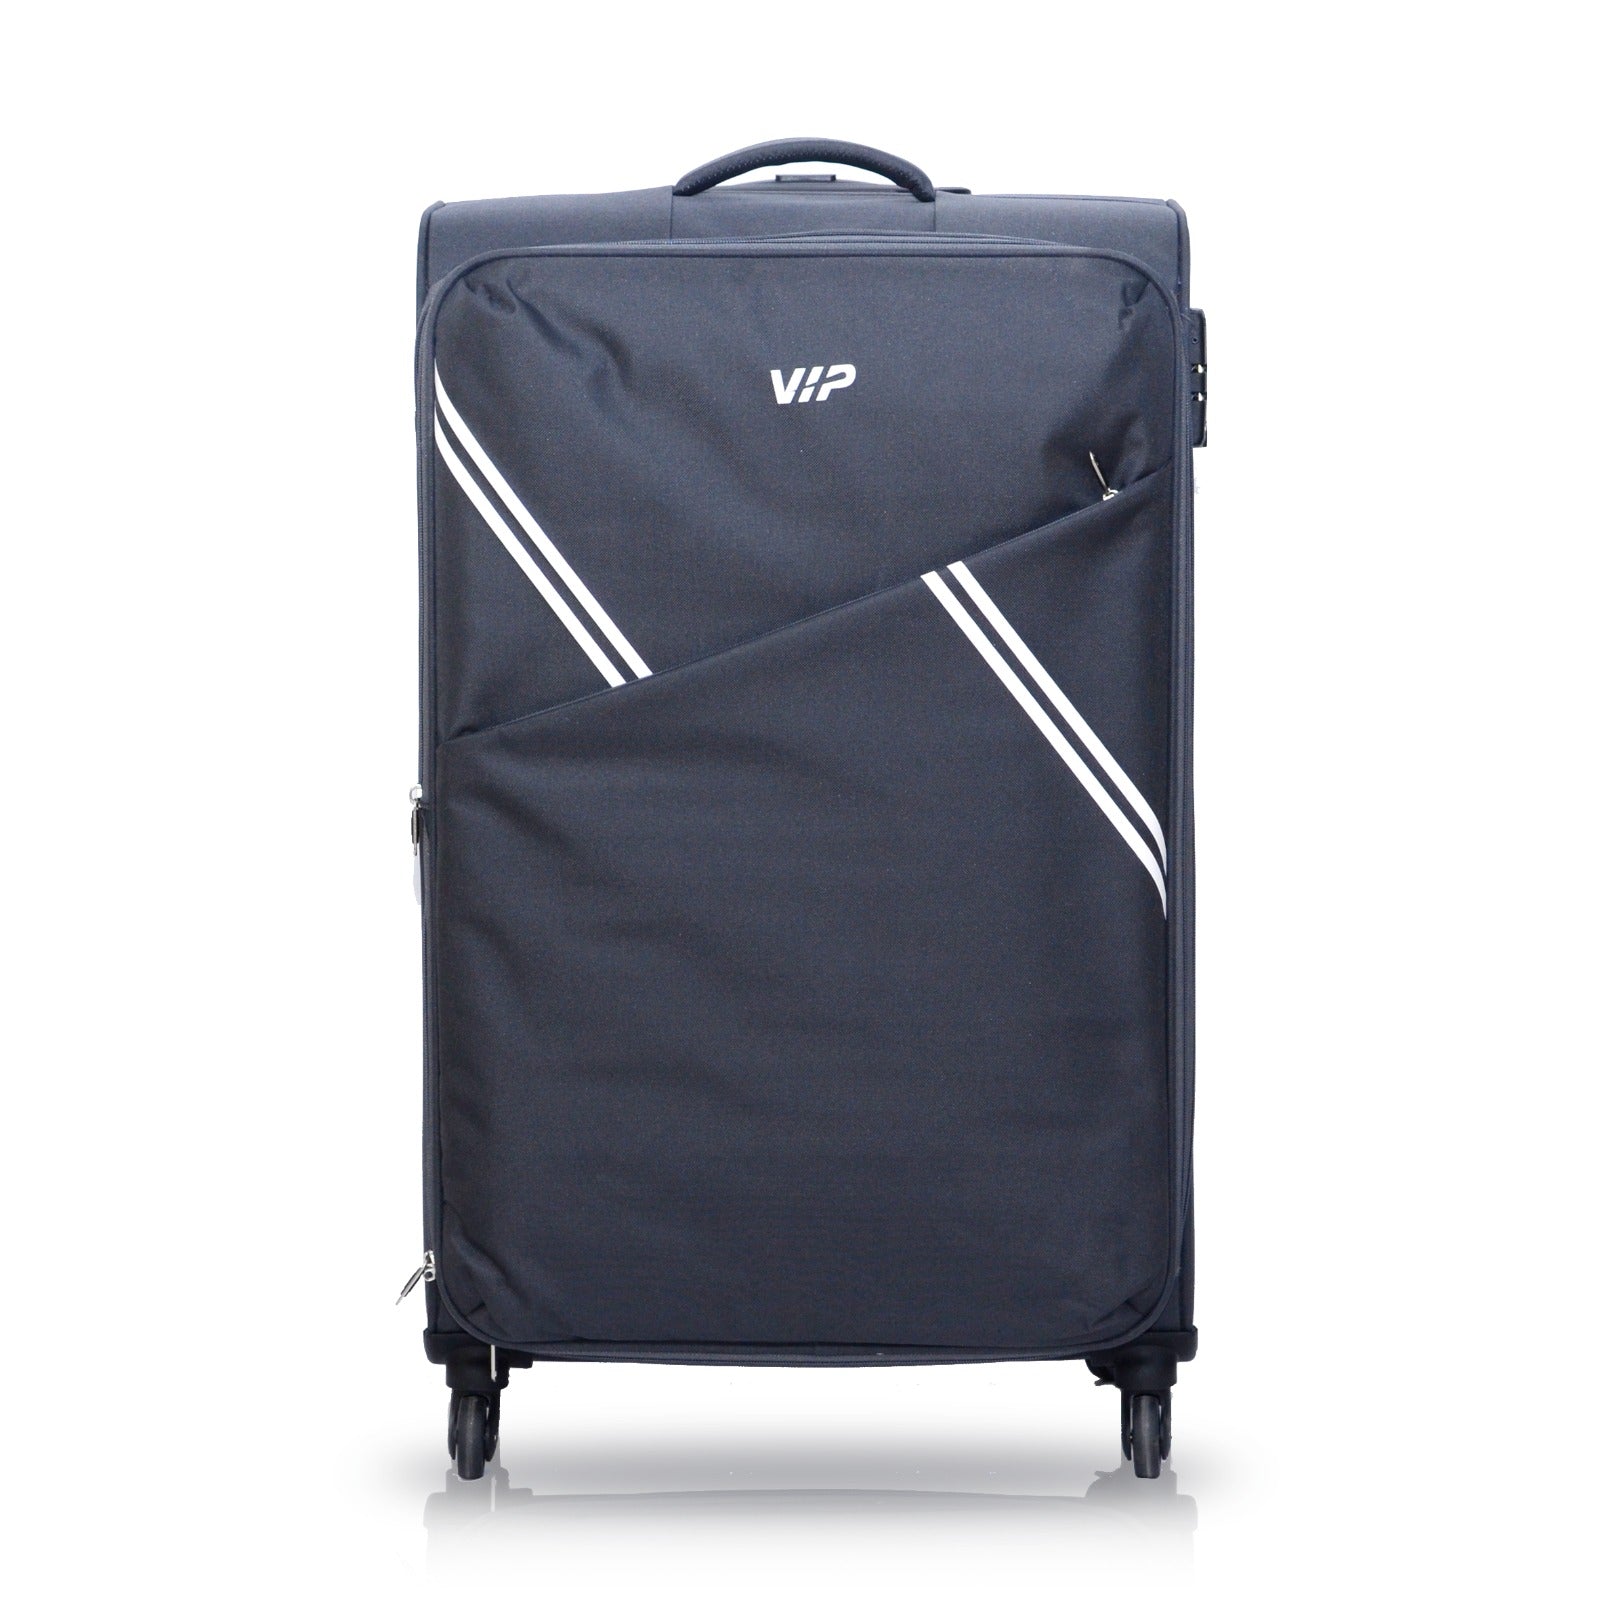 VIP Verona 59cm 4 Wheel Cabin Luggage Trolley Grey